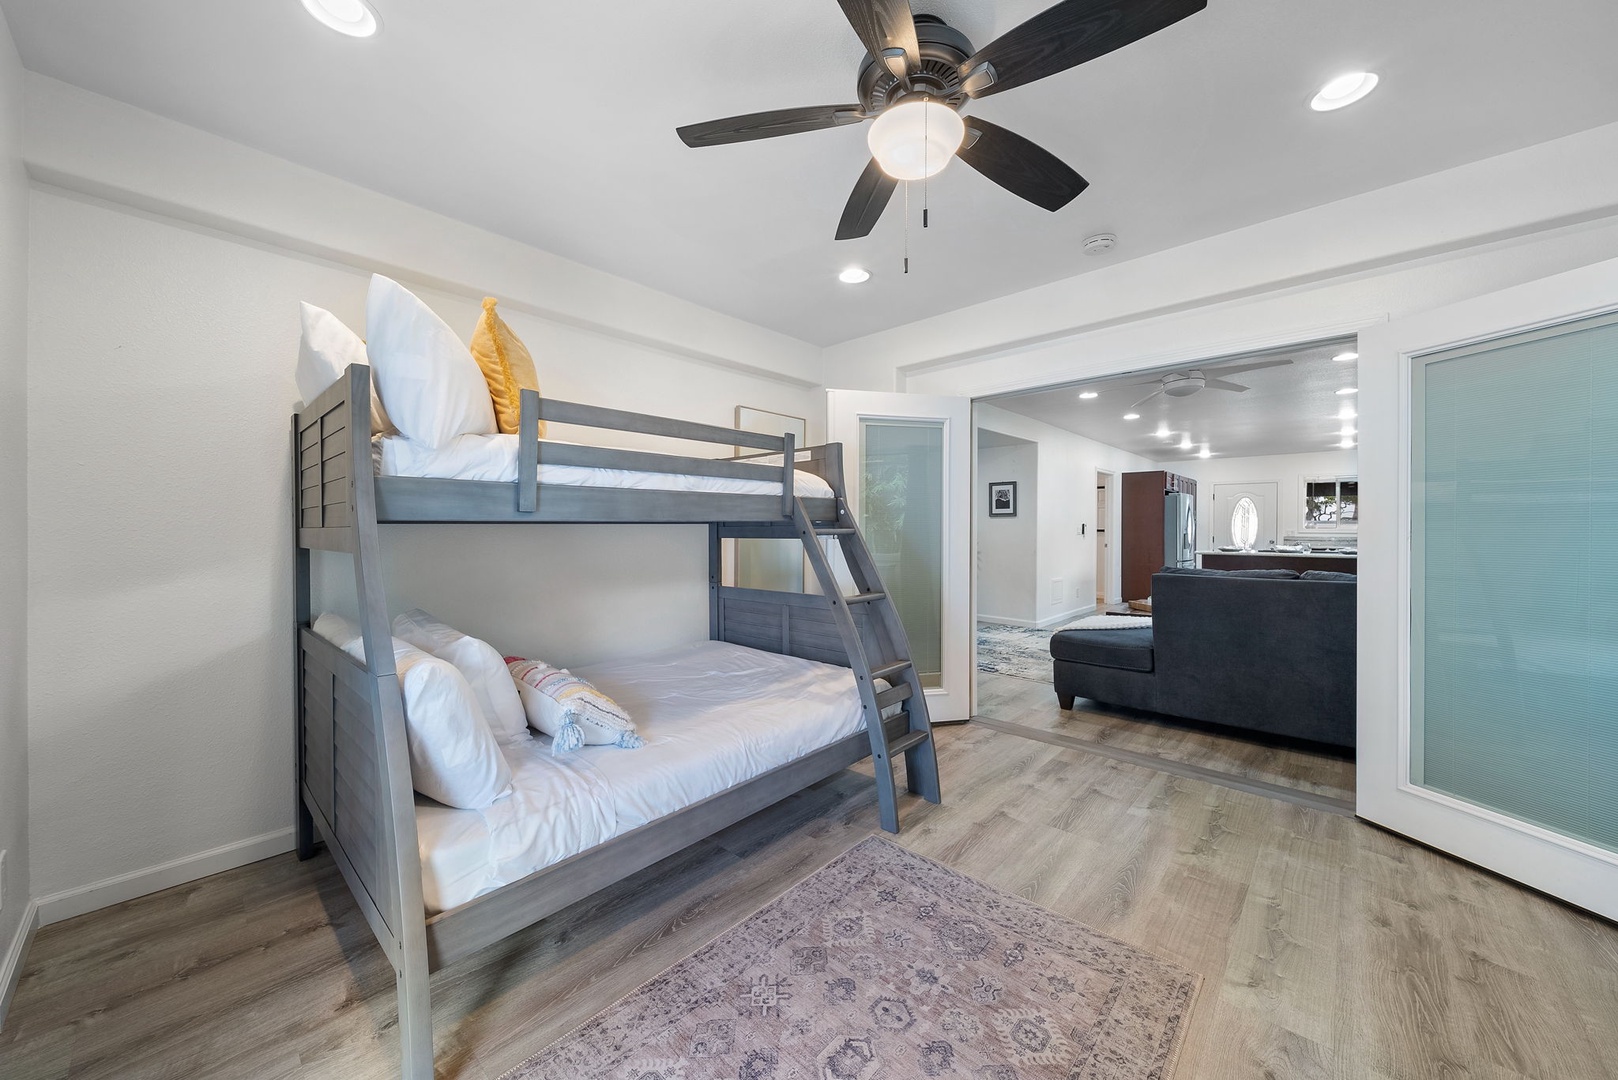 Kaaawa Vacation Rentals, Kualoa Ohia - Guest bedroom 5 has bunk beds for extra guests